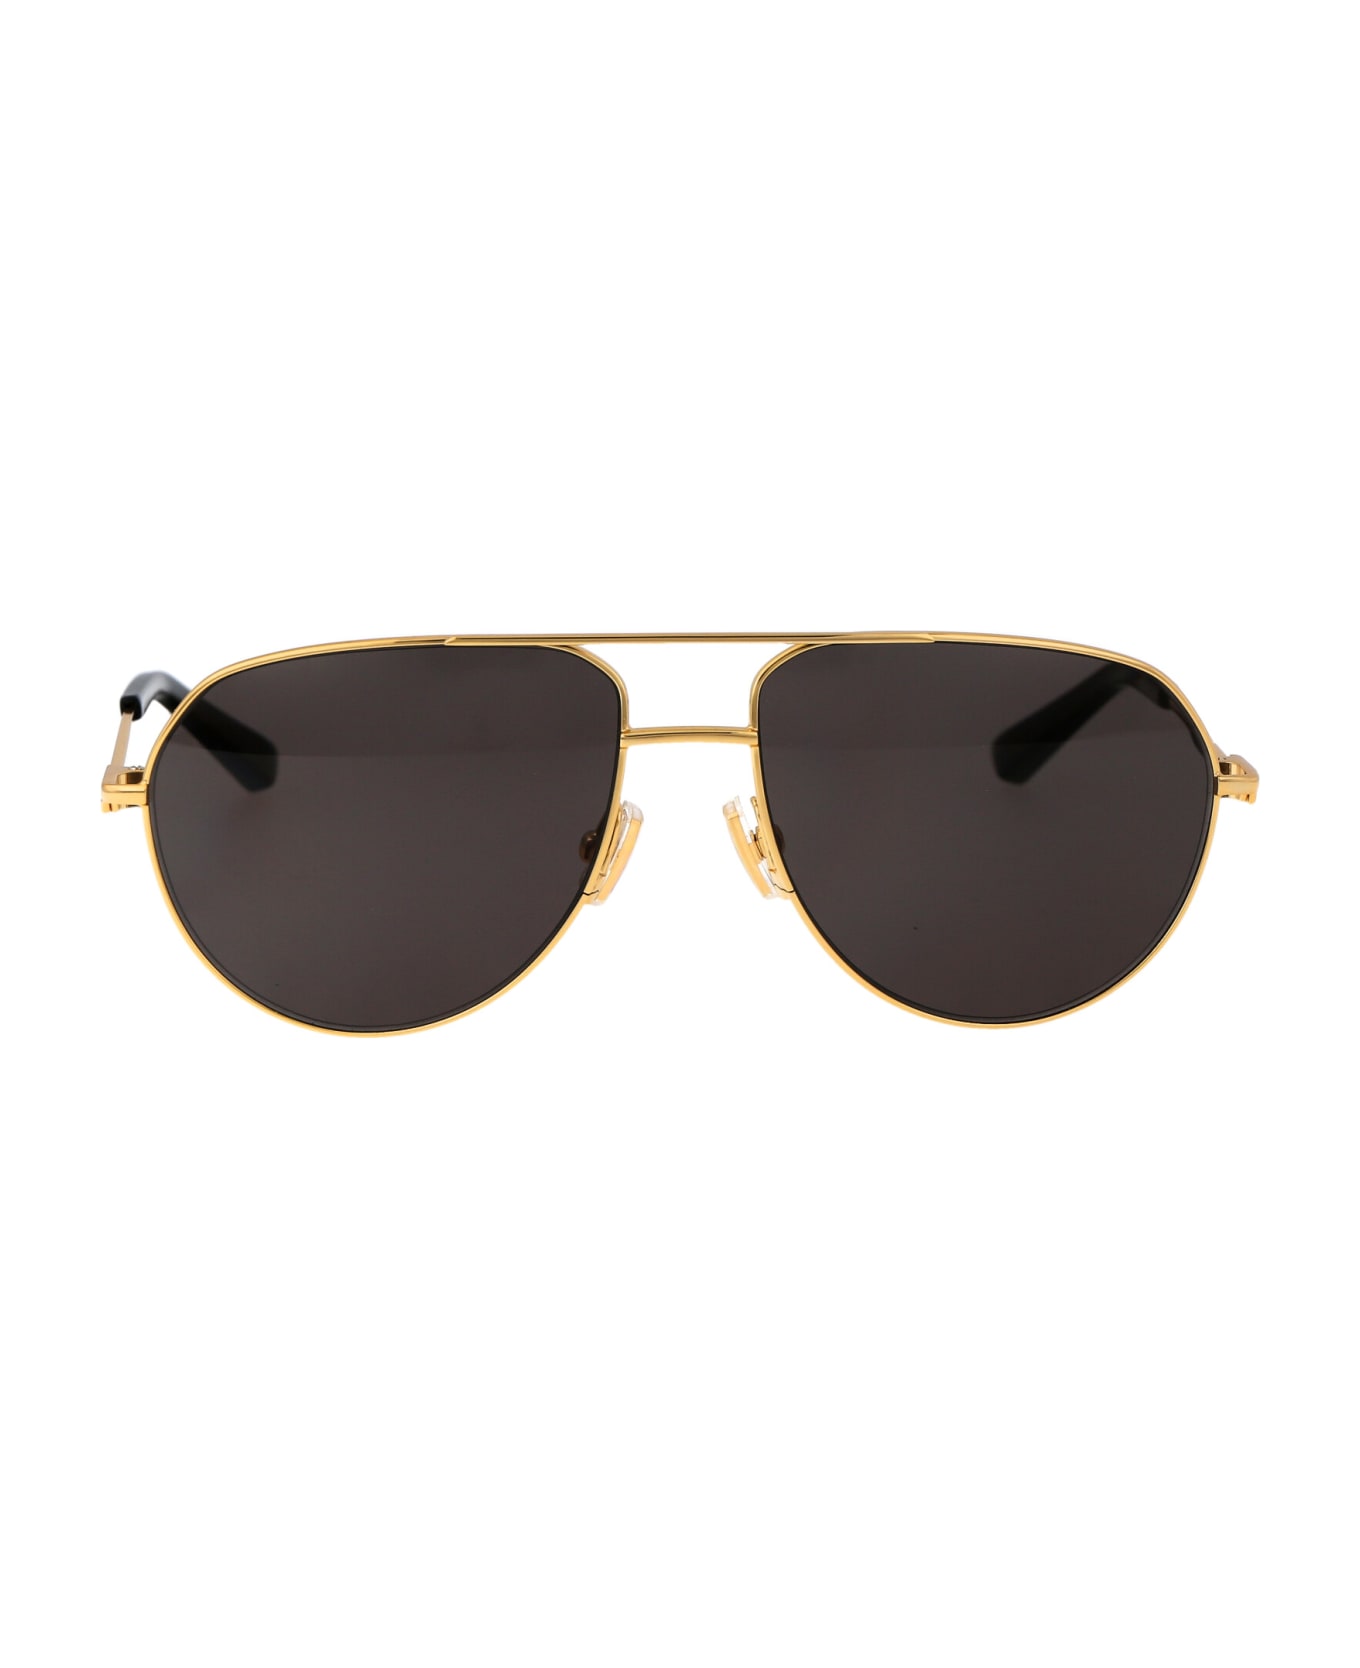 Bottega Veneta Eyewear Bv1302s Sunglasses - 001 GOLD GOLD GREY